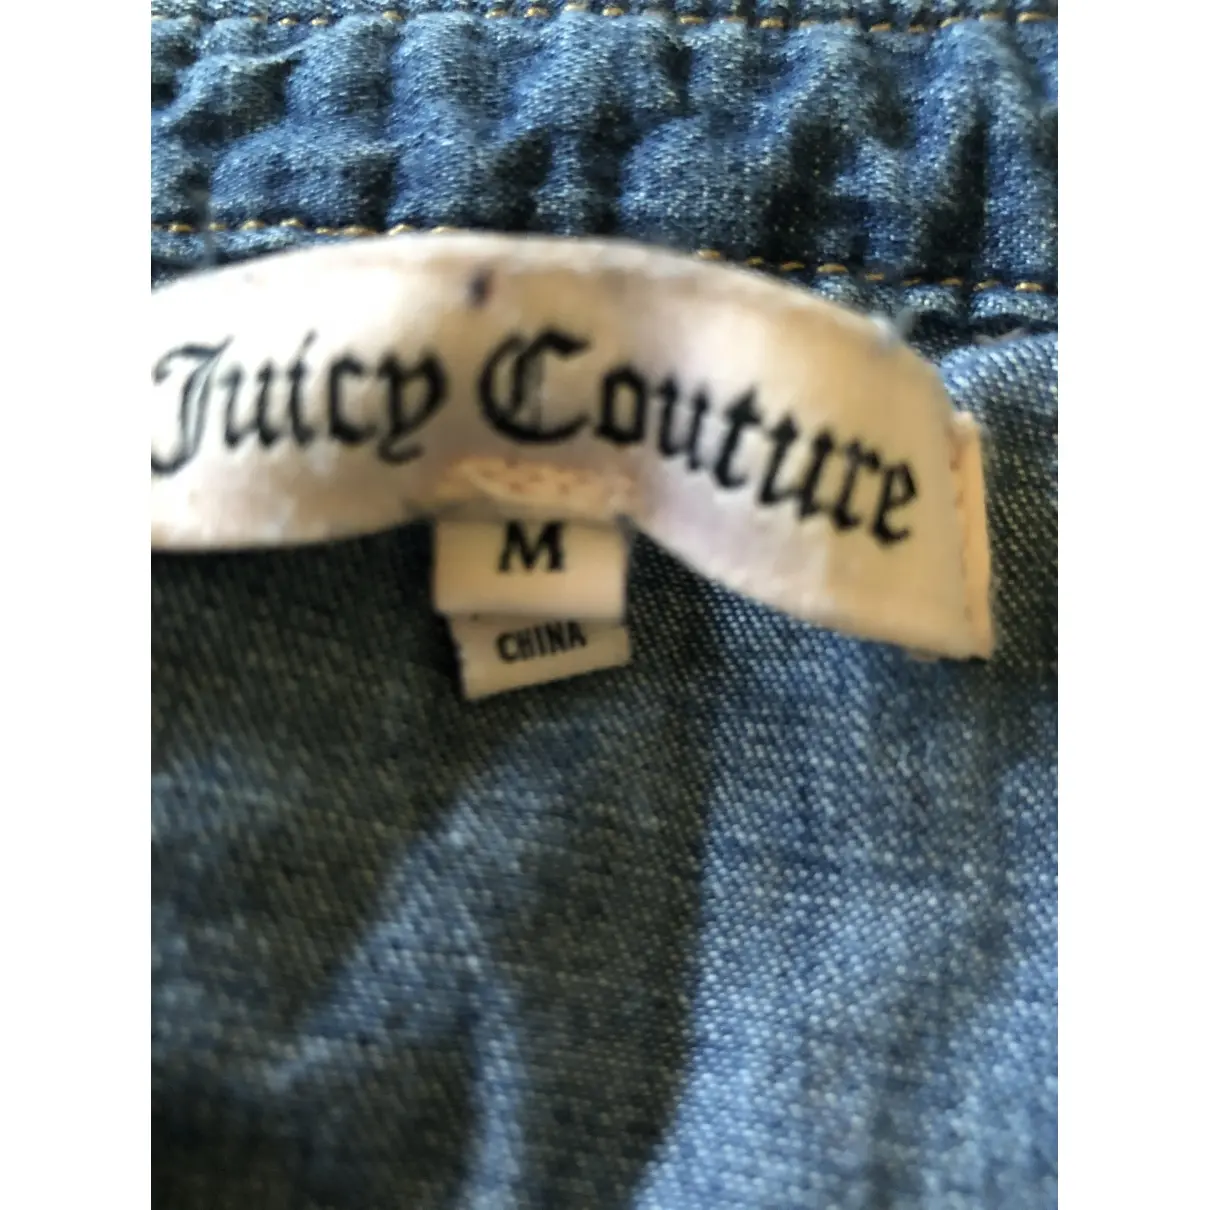 Buy Juicy Couture Shirt online